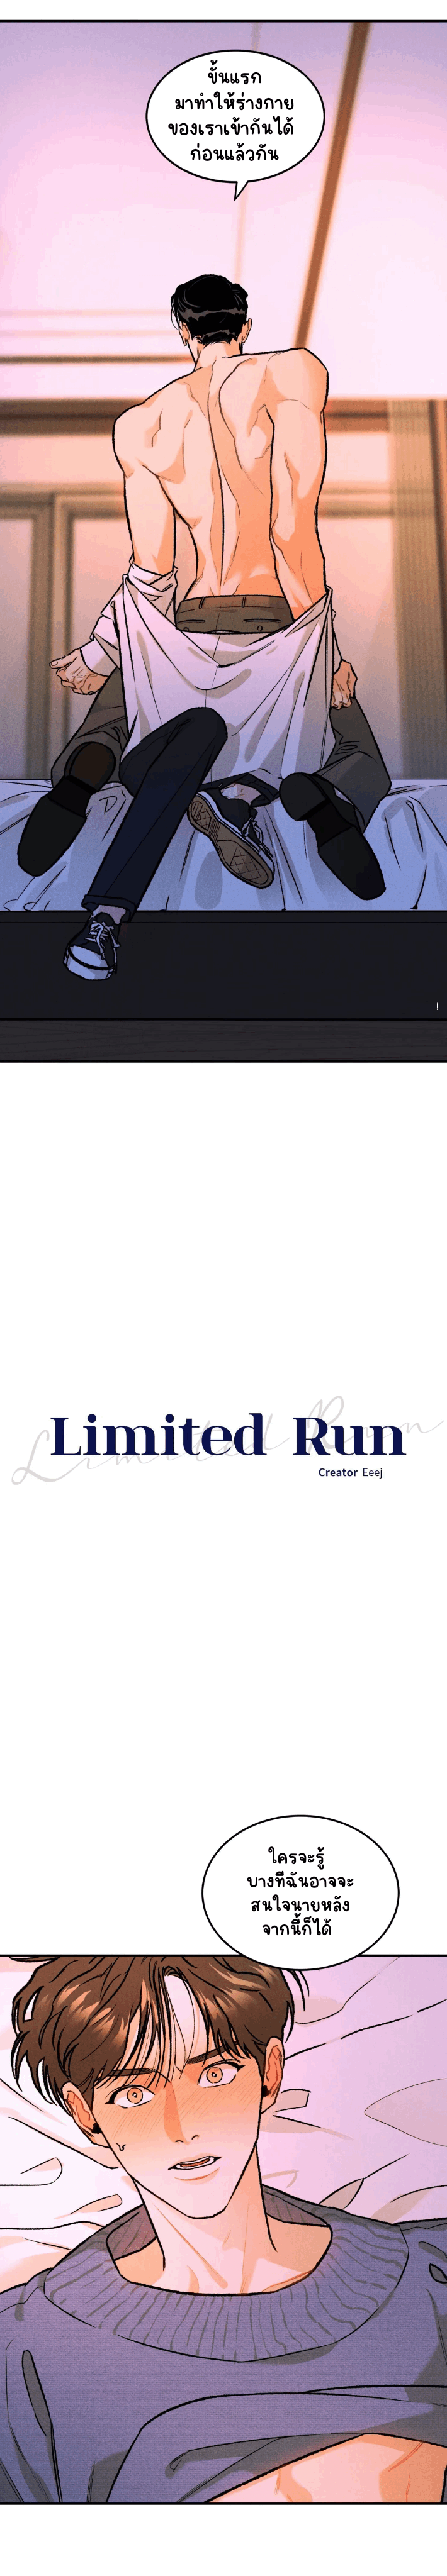 Limited Run 5-3